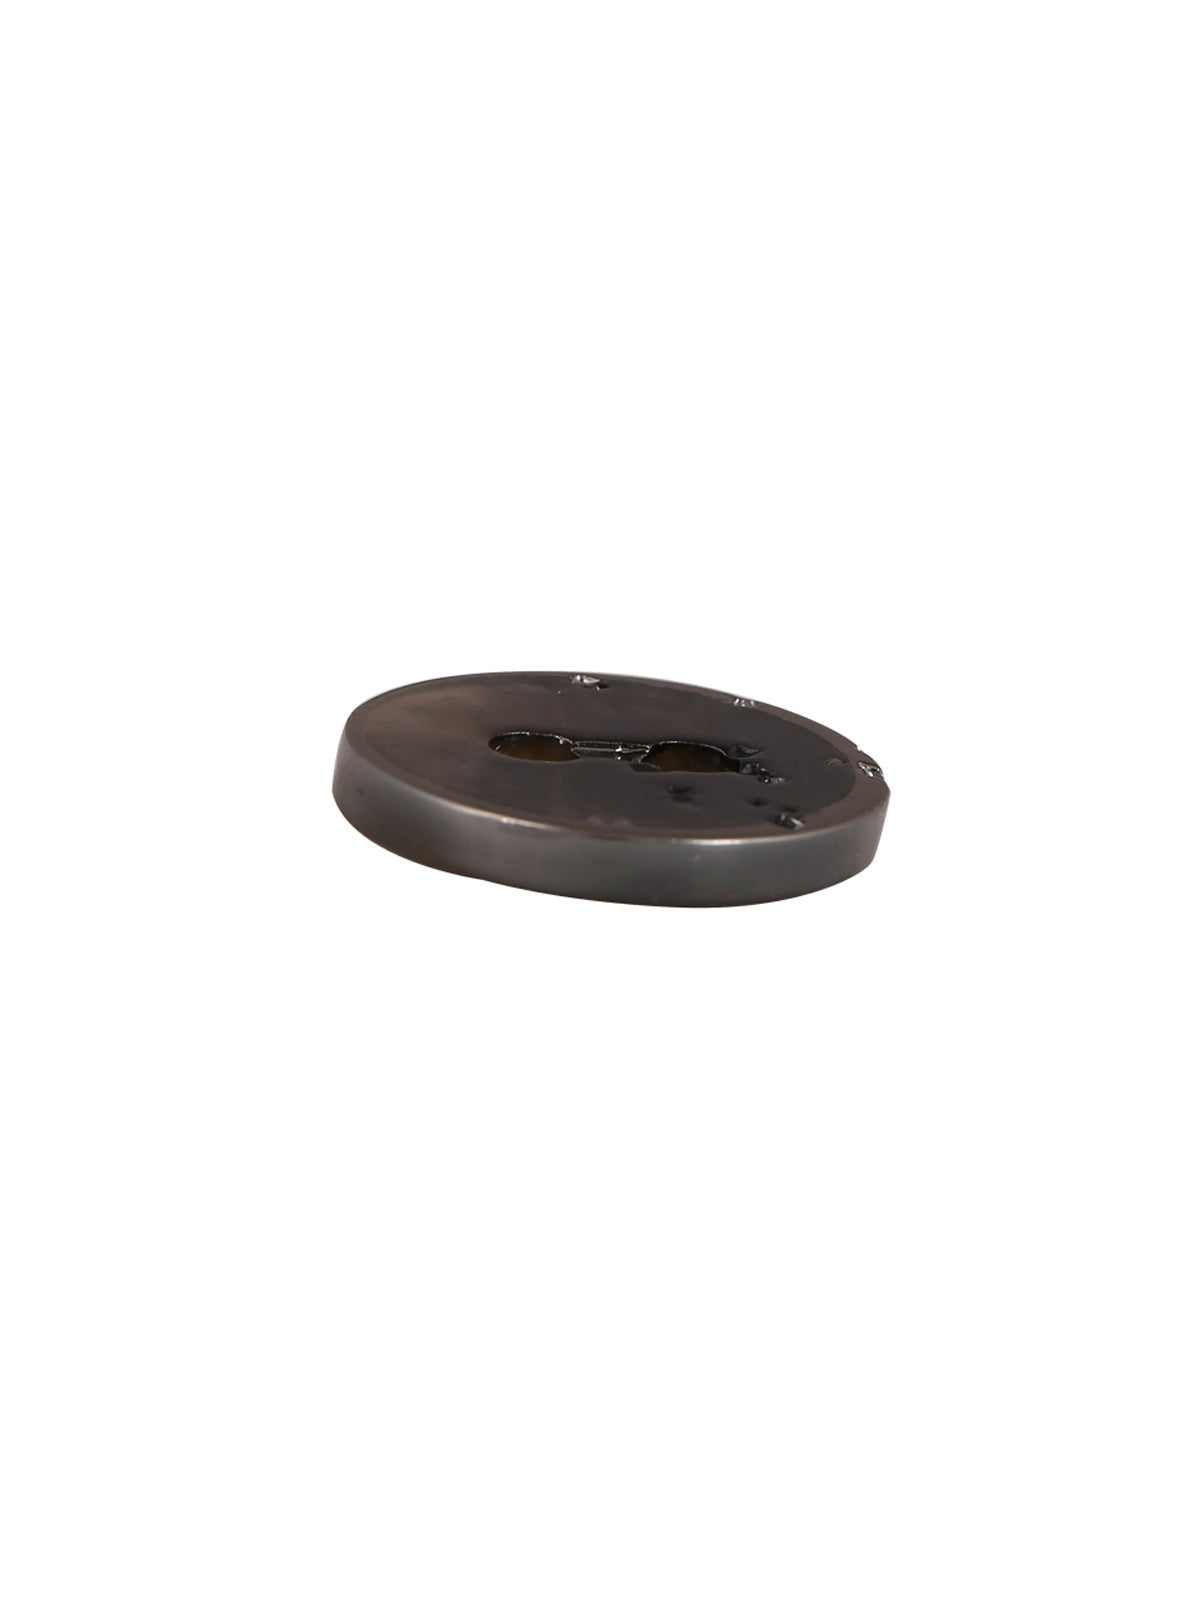 Decorative Round Shape 2-Hole Smooth & Shiny Button